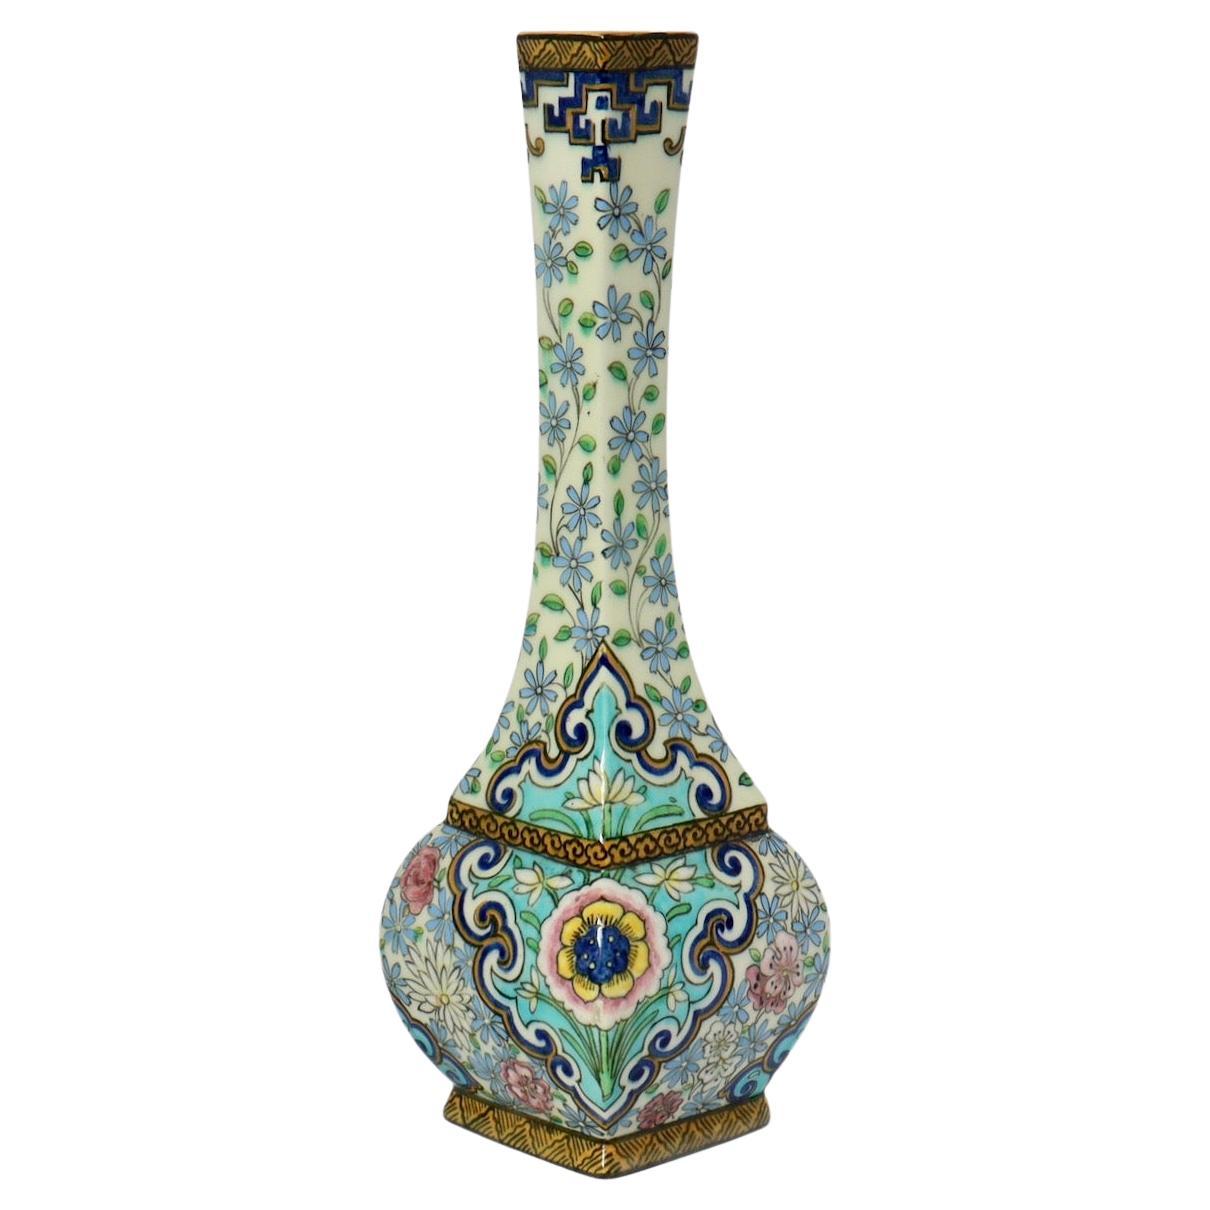 A Théodore Deck (1823-1891) Enamelled Faience Soliflore Vase circa 1875